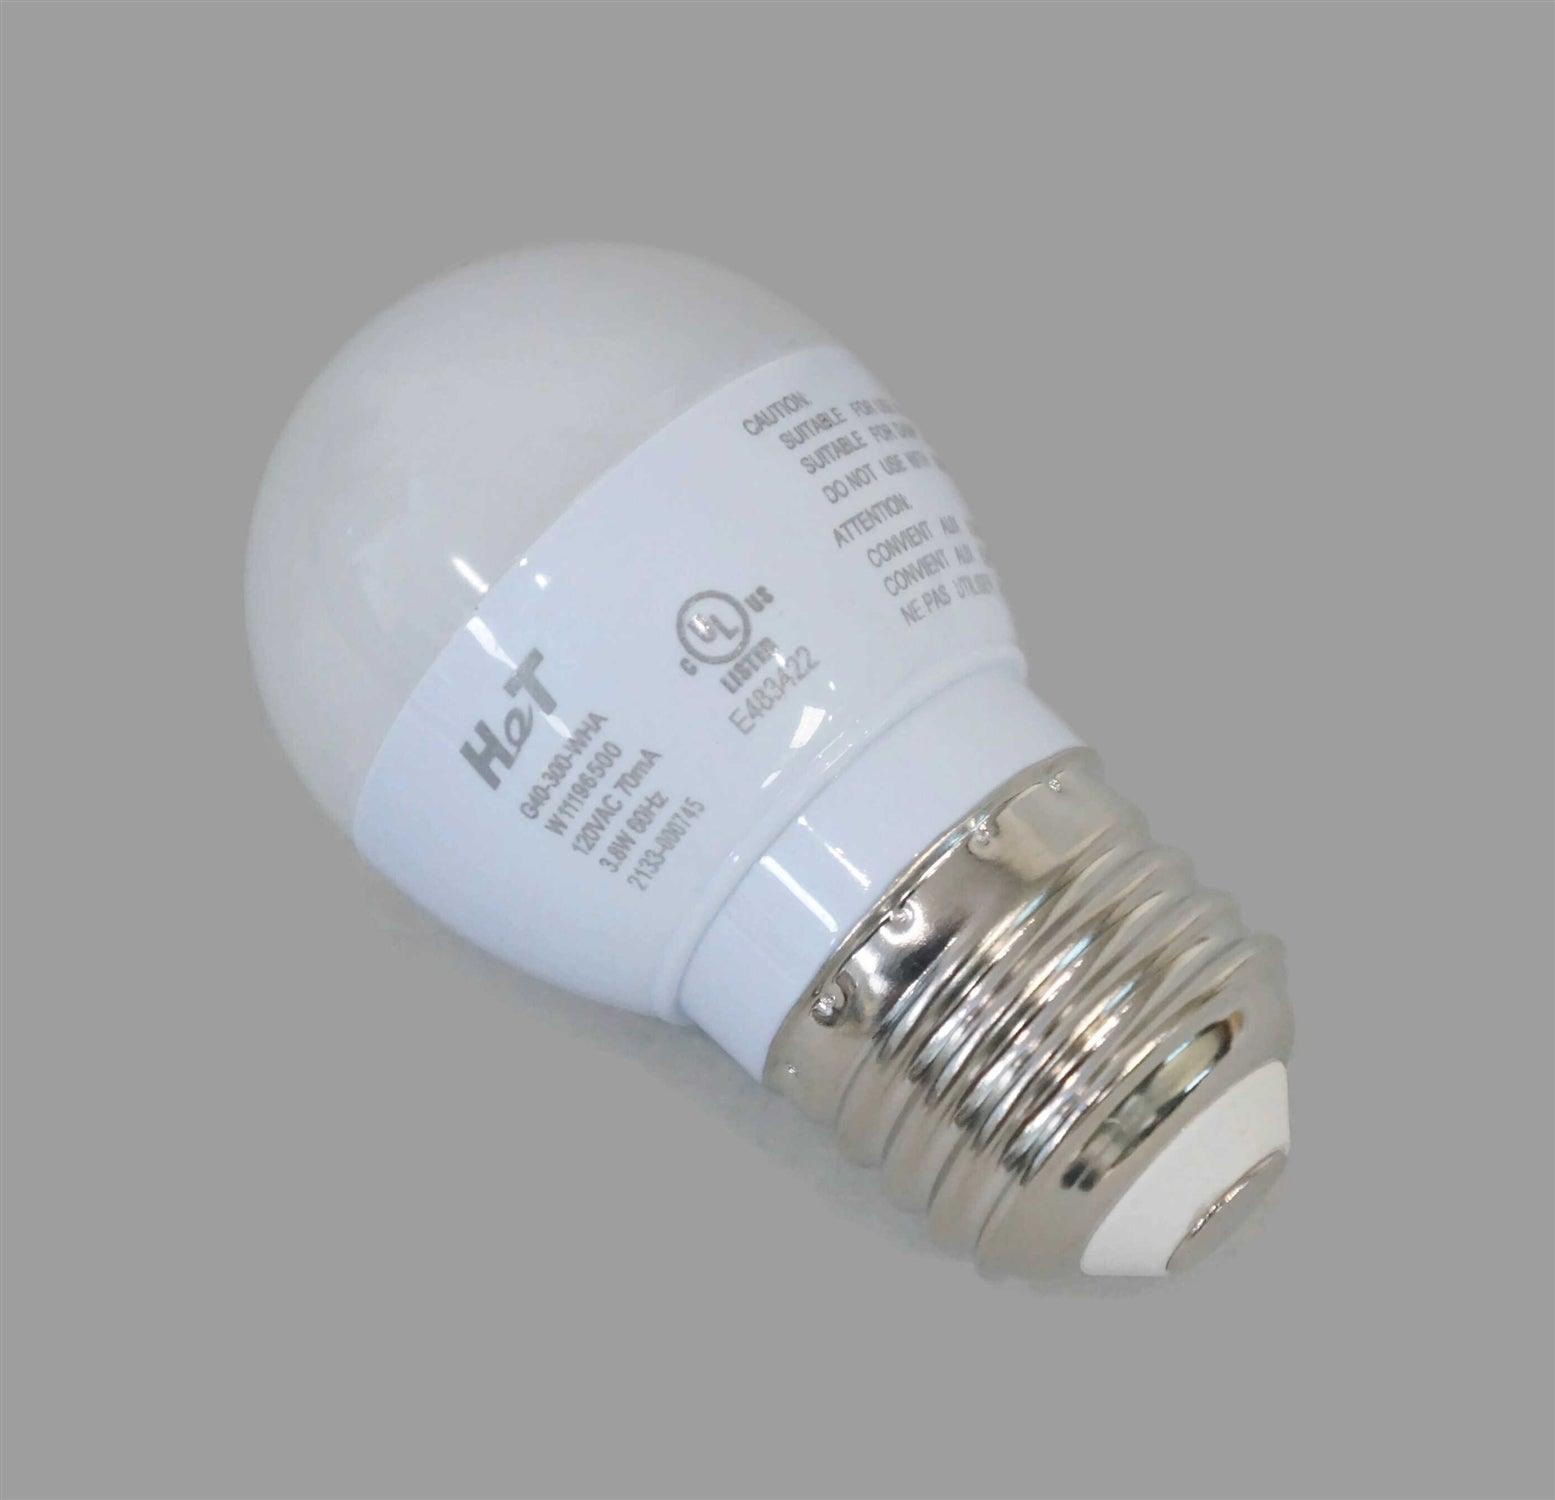 Whirlpool W10565137 Refrigerator Freezer LED Light Bulb